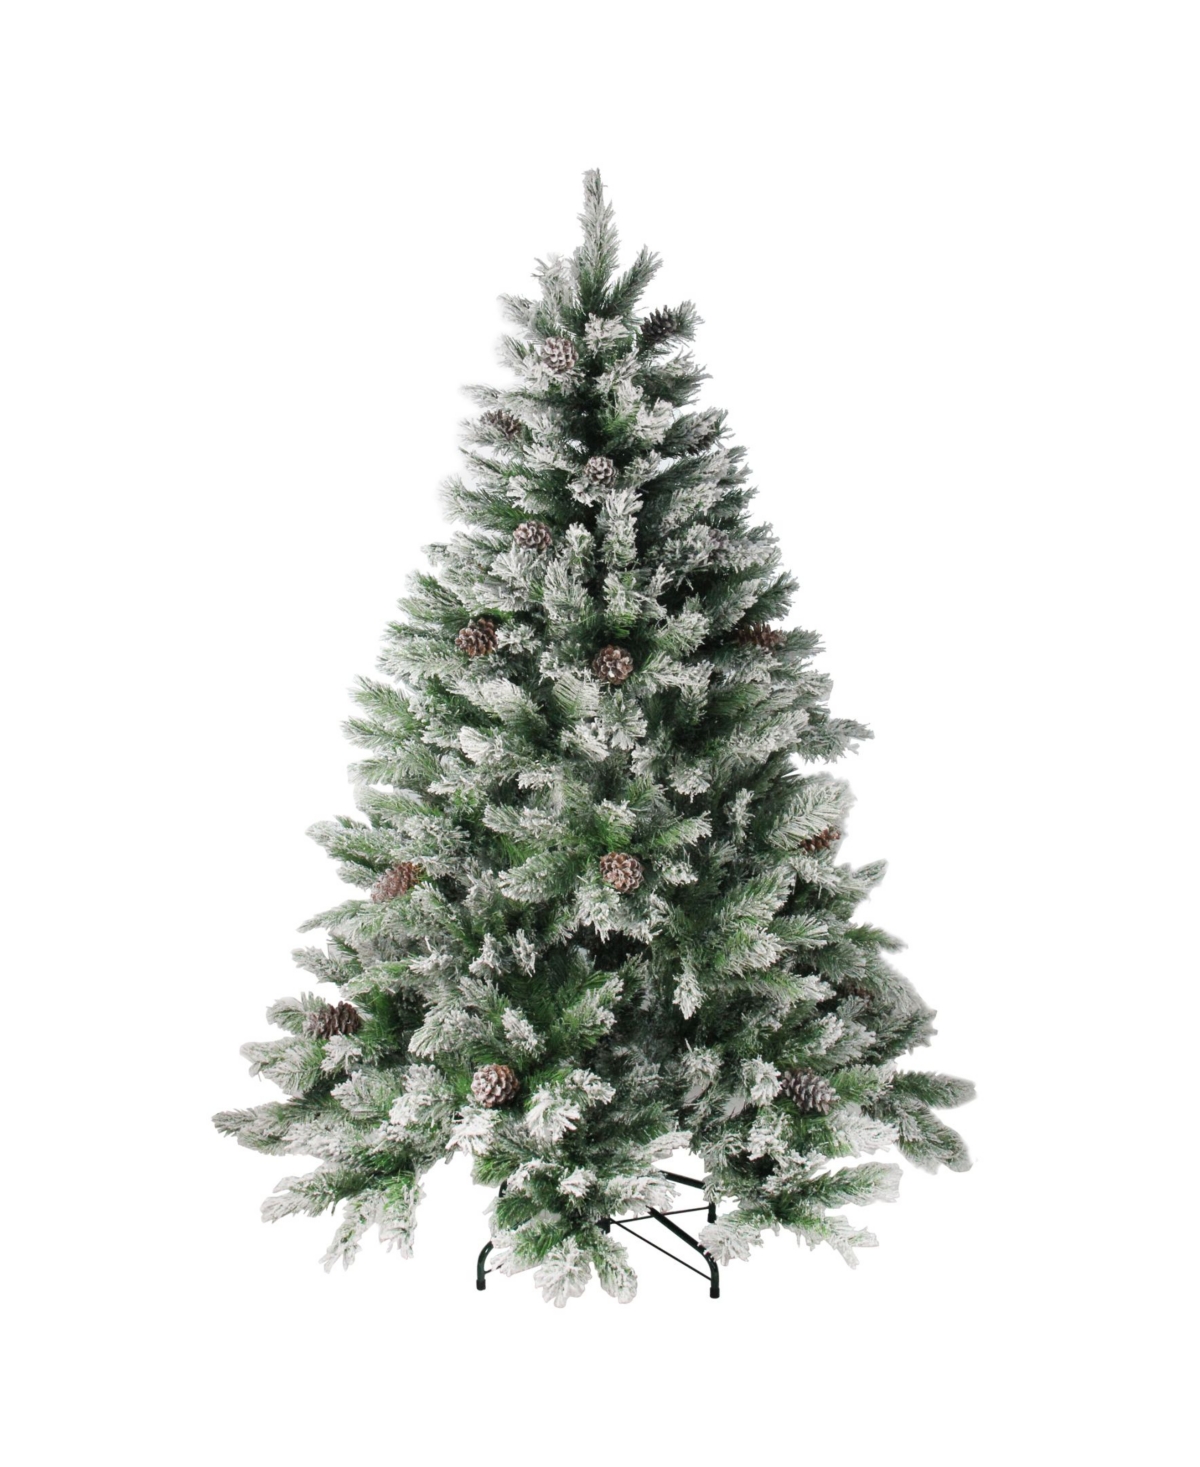 22 Green Pine Teardrop Artificial Christmas Swag - Unlit